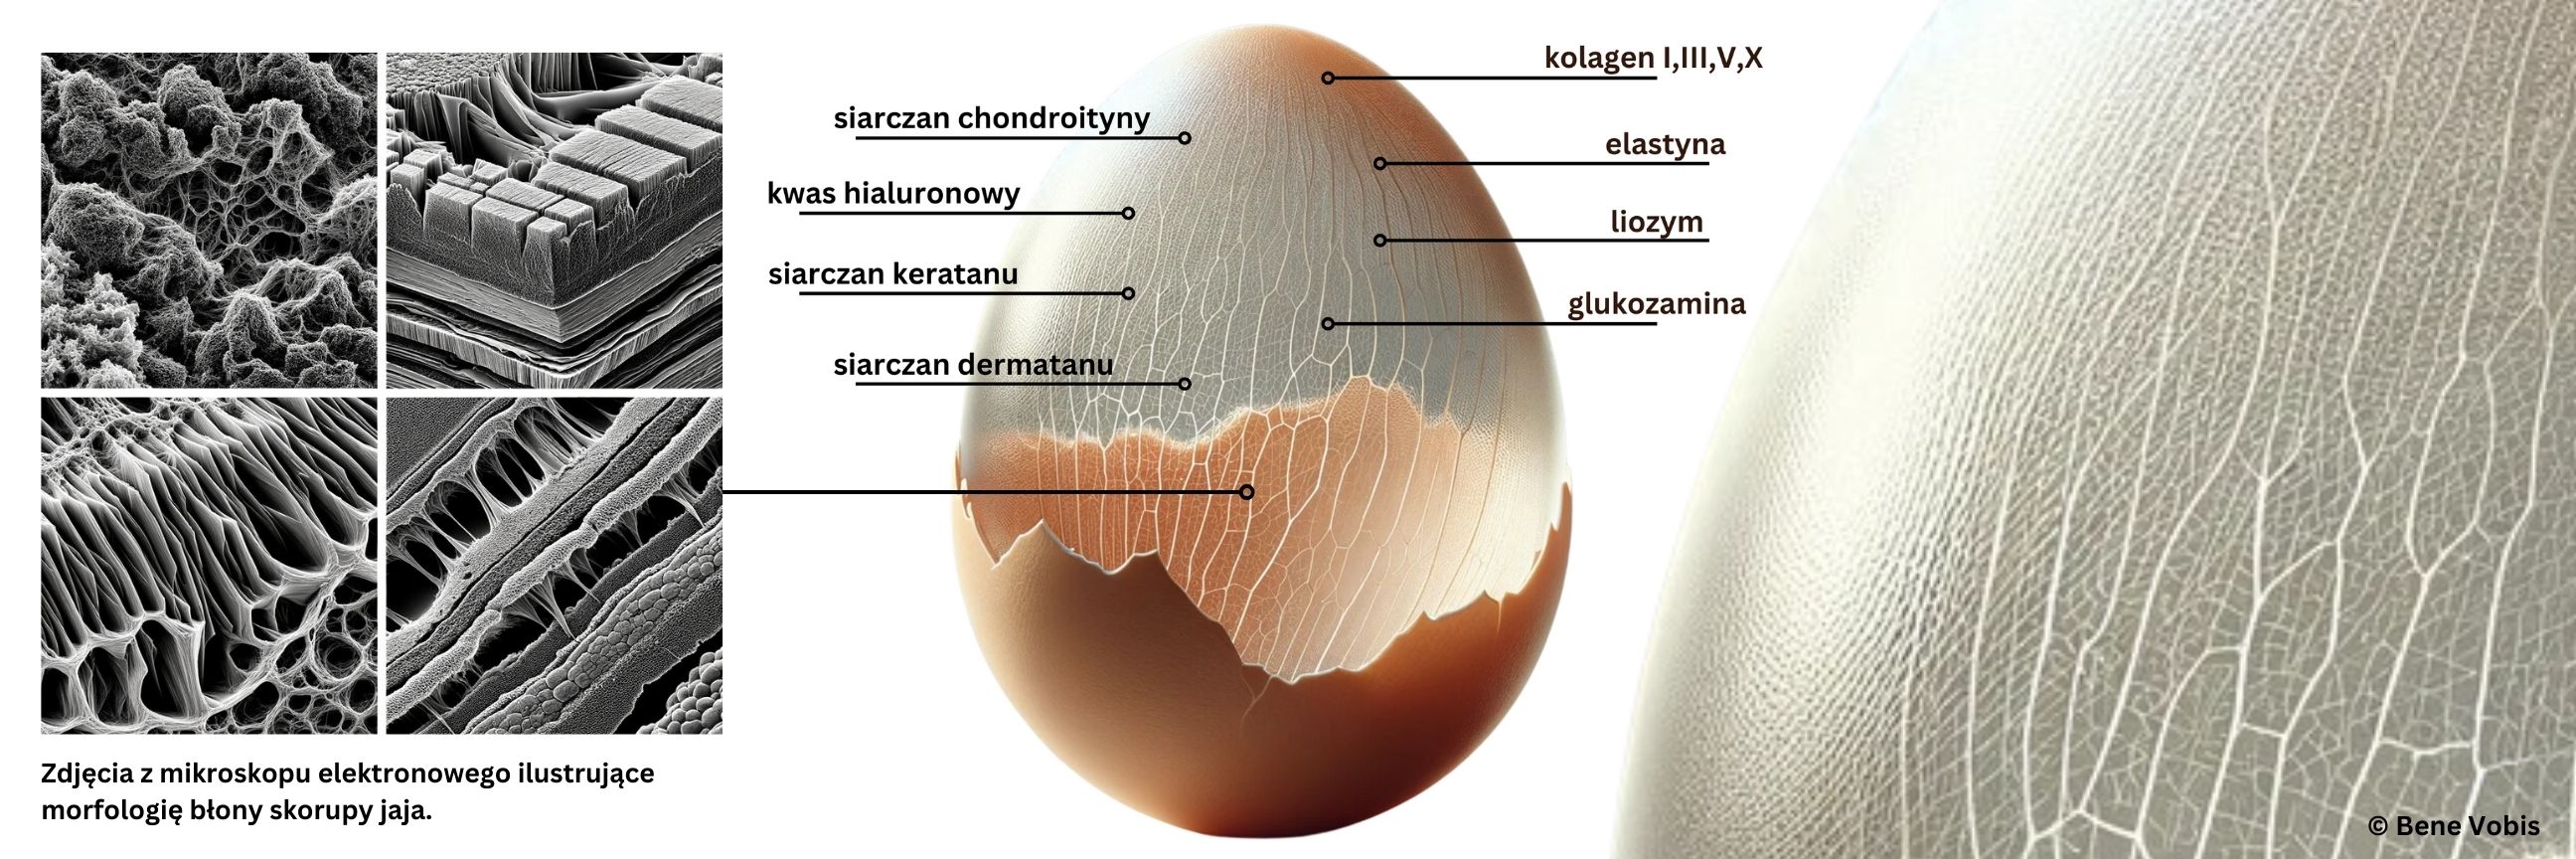 Membrana jaja